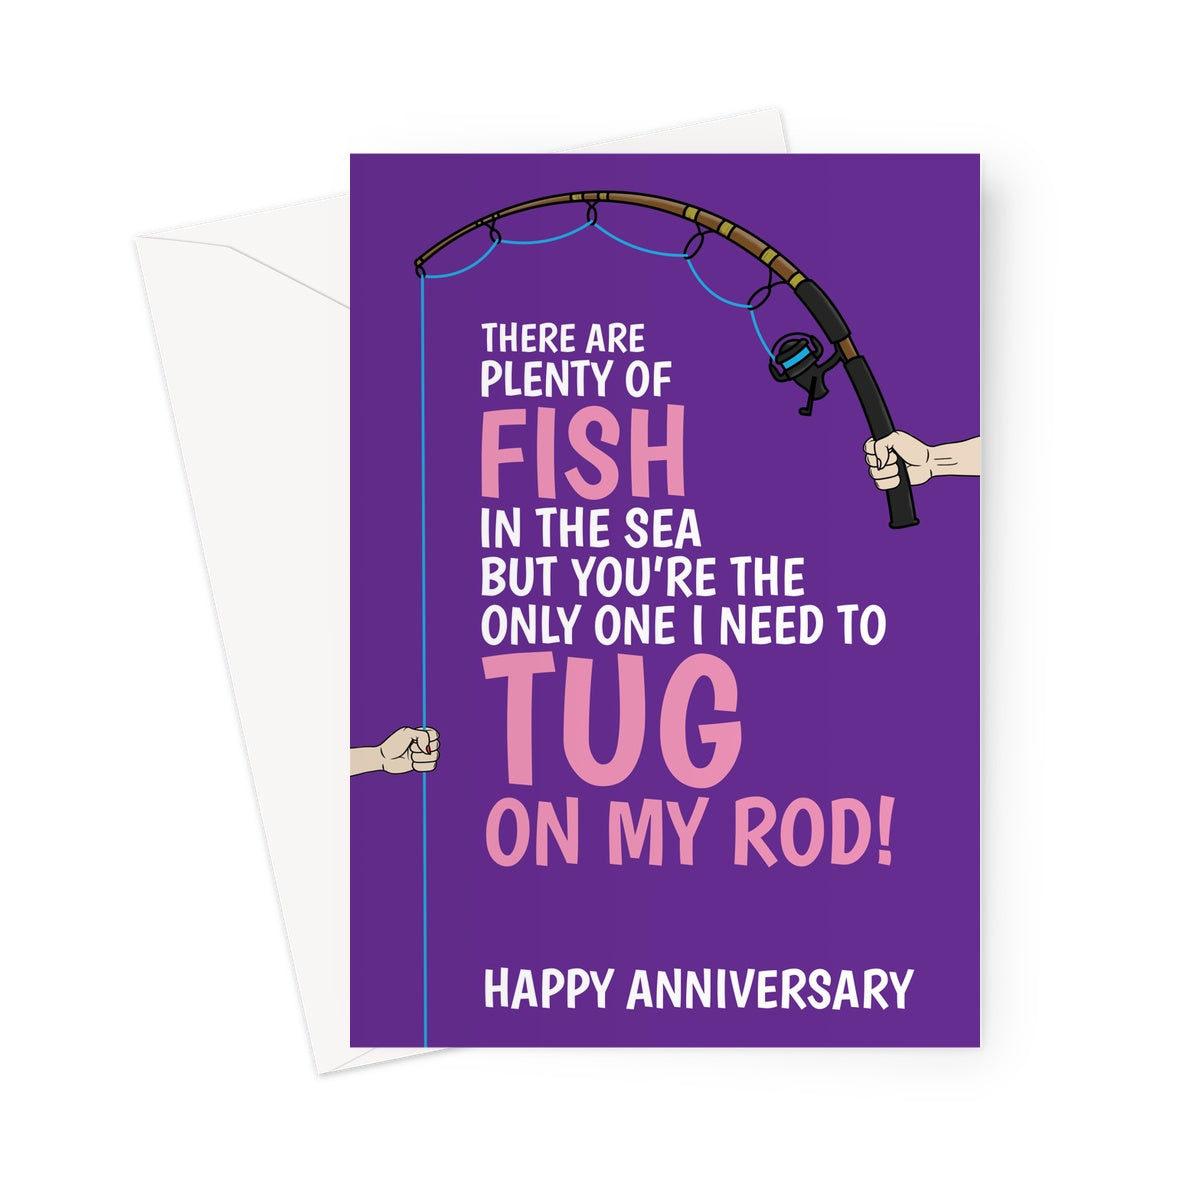 Cheeky Fishing Pun Anniversary Card For Wife